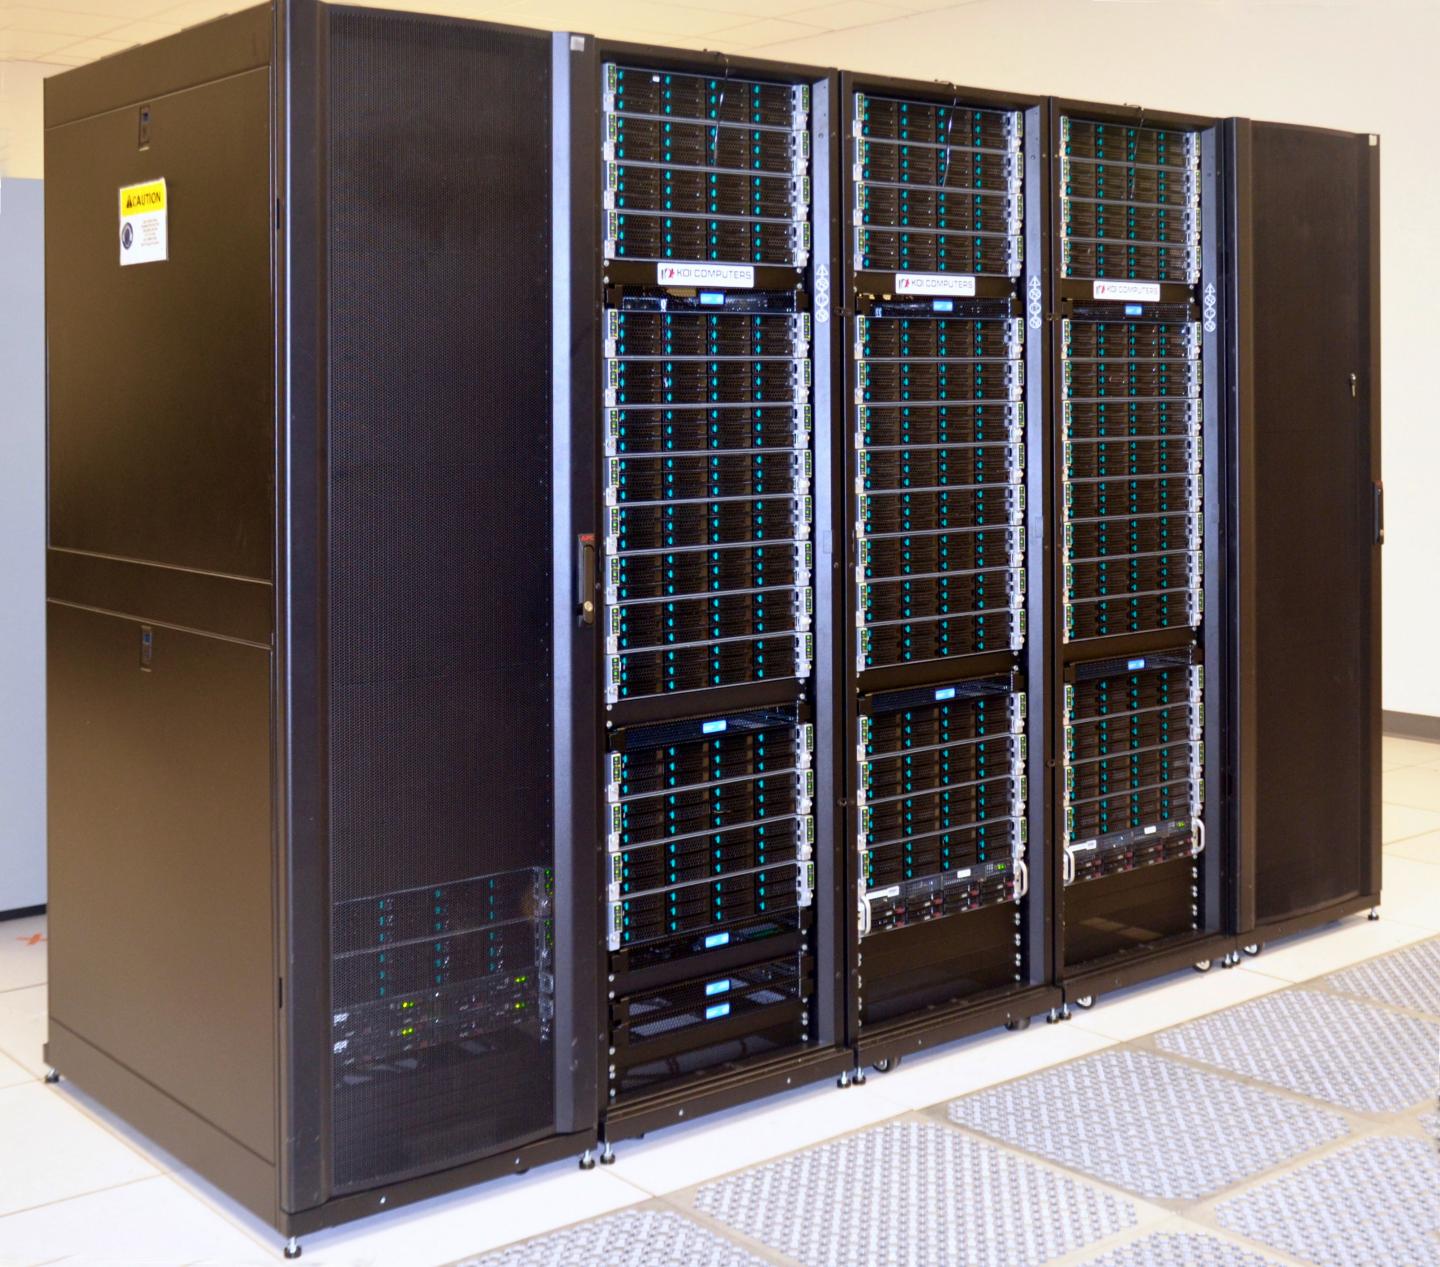 Sci-Phi XVI Supercomputer